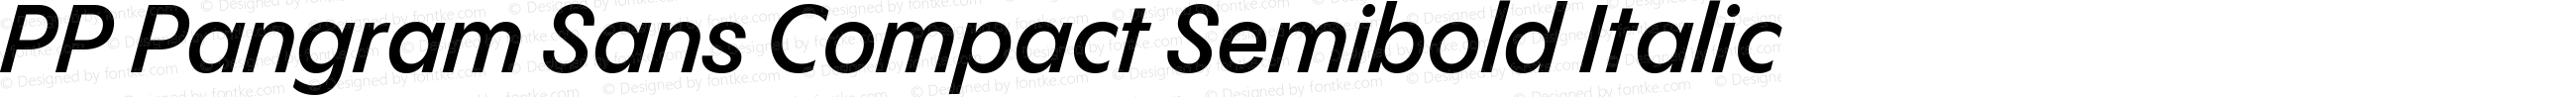 PP Pangram Sans Compact Semibold Italic